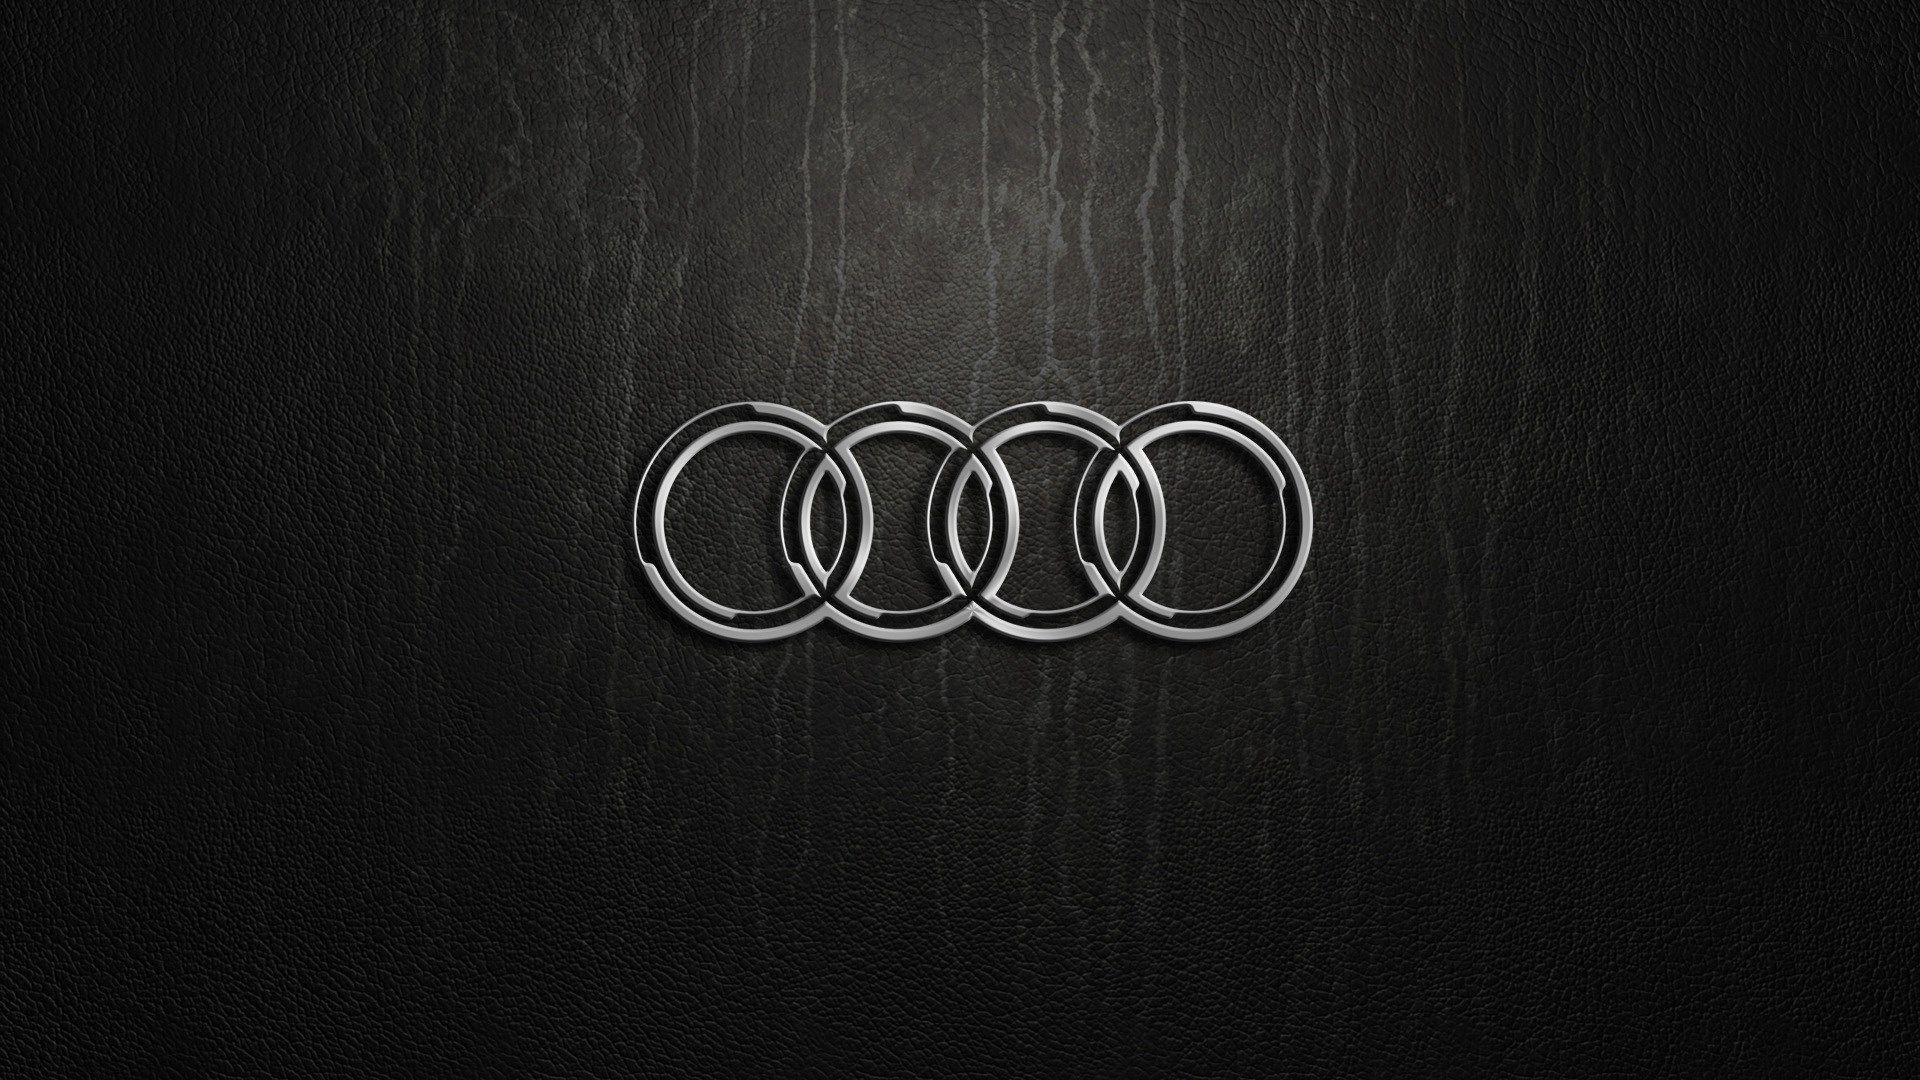 Cool HD Logo - audi logo wallpaper full hd | ololoshenka | Wallpaper, Logos, Cars